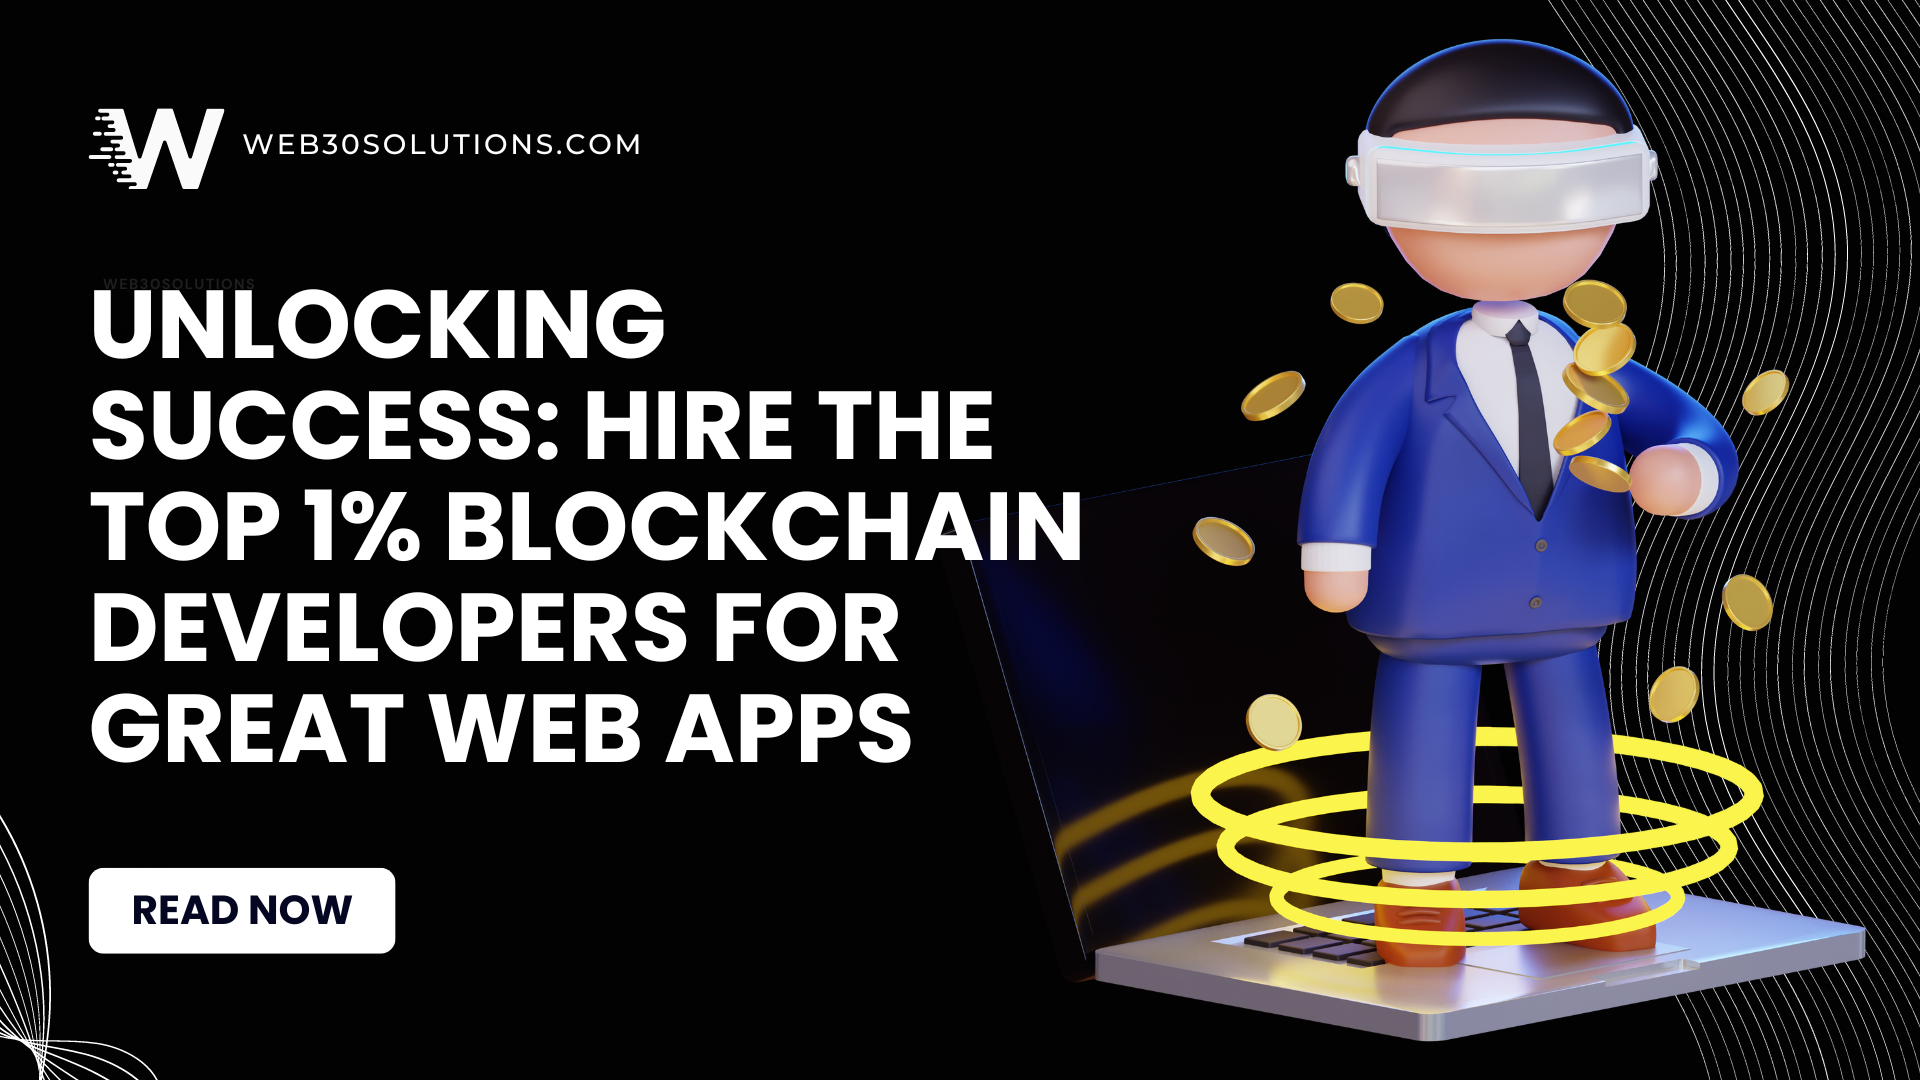 Hire Top 1% Blockchain Developers - Web 3.0 Solutions